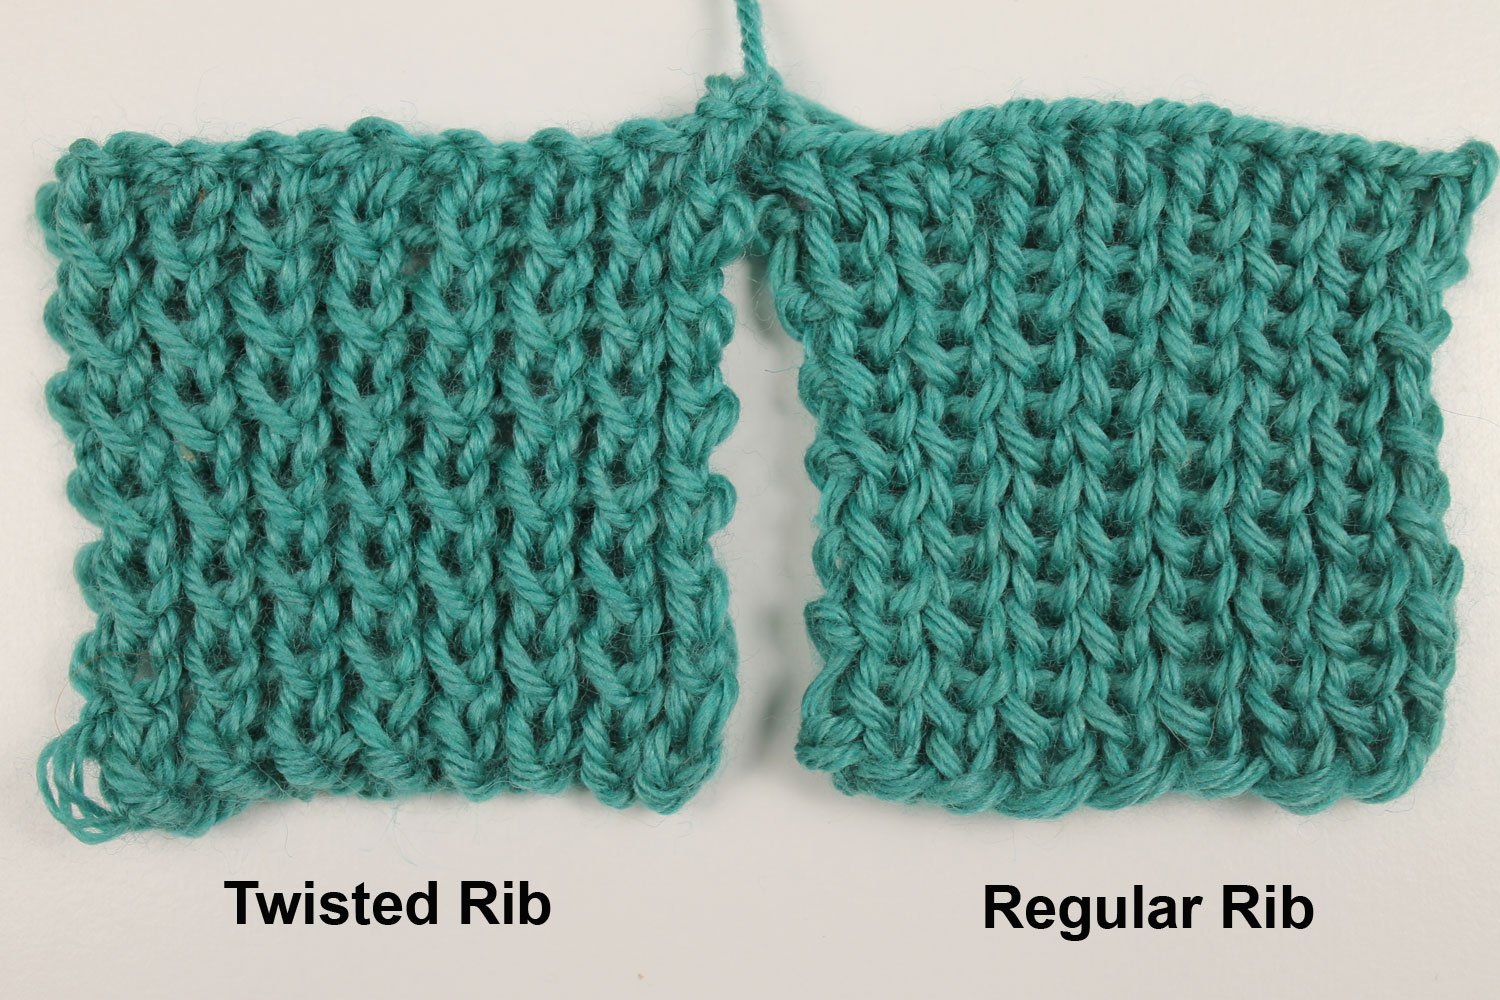 Regular Rib and Twisted Rib